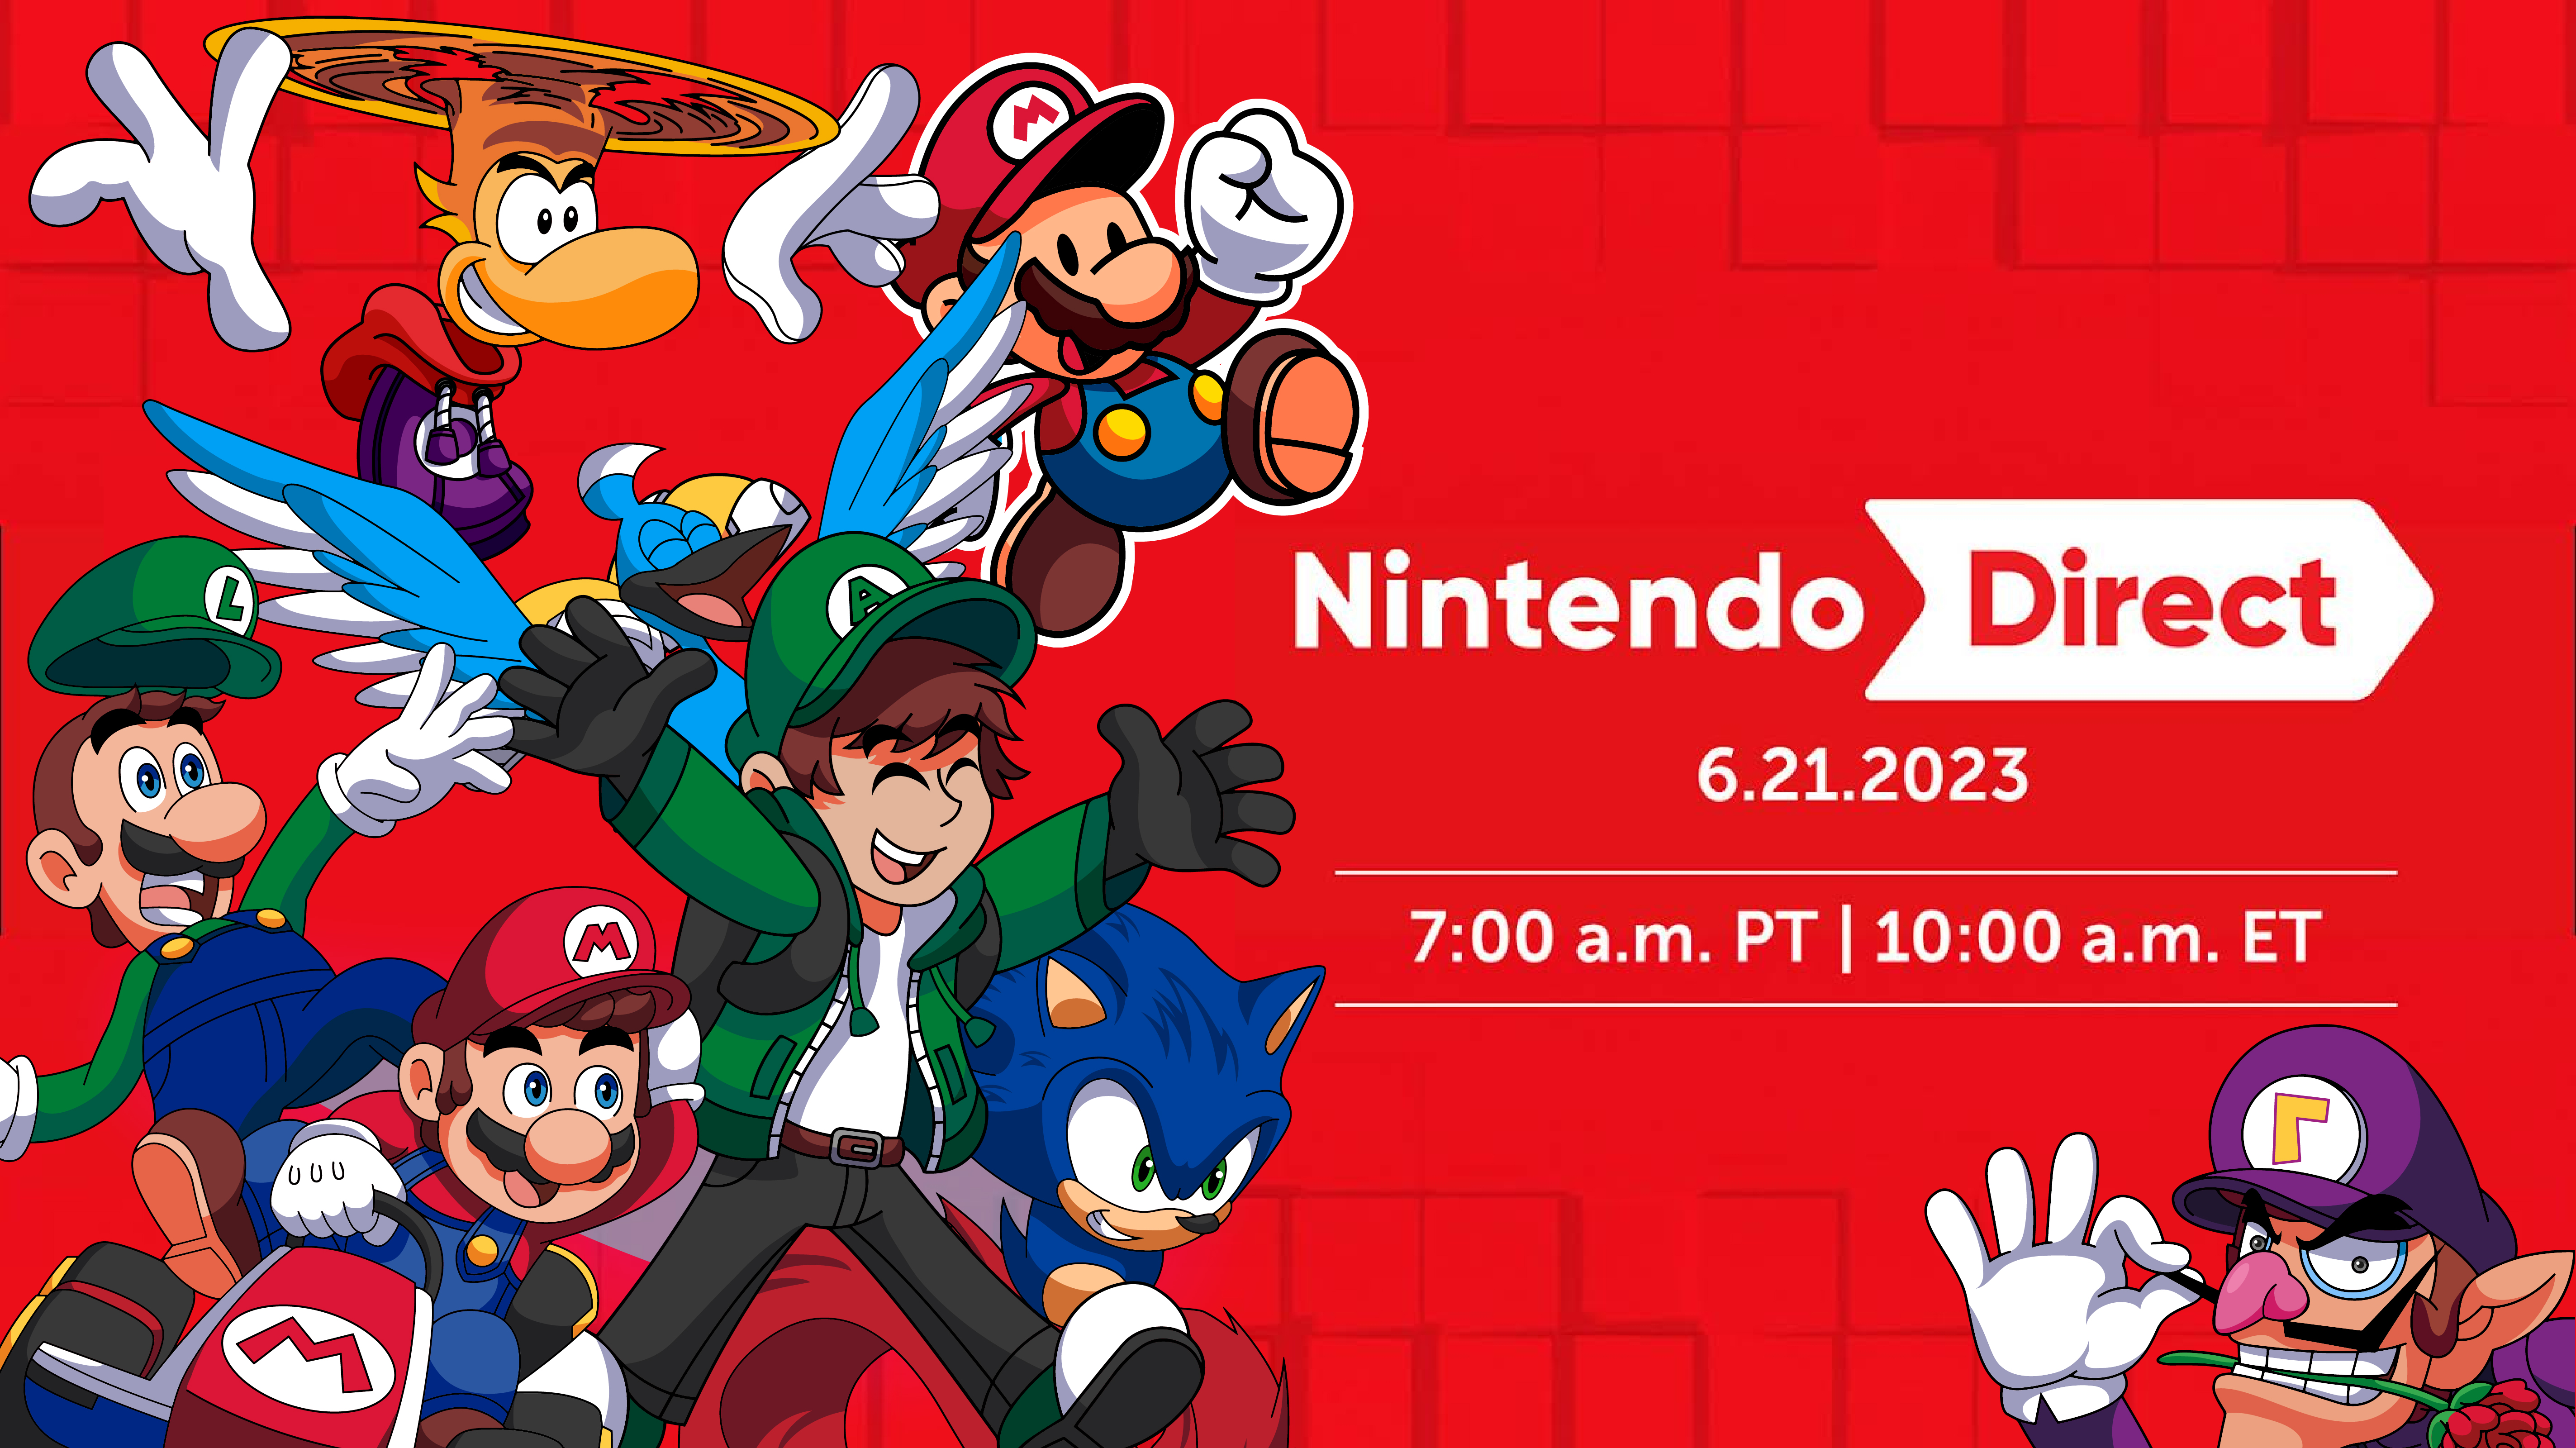 Nintendo Direct 6.21.2023 - Nintendo Official Site